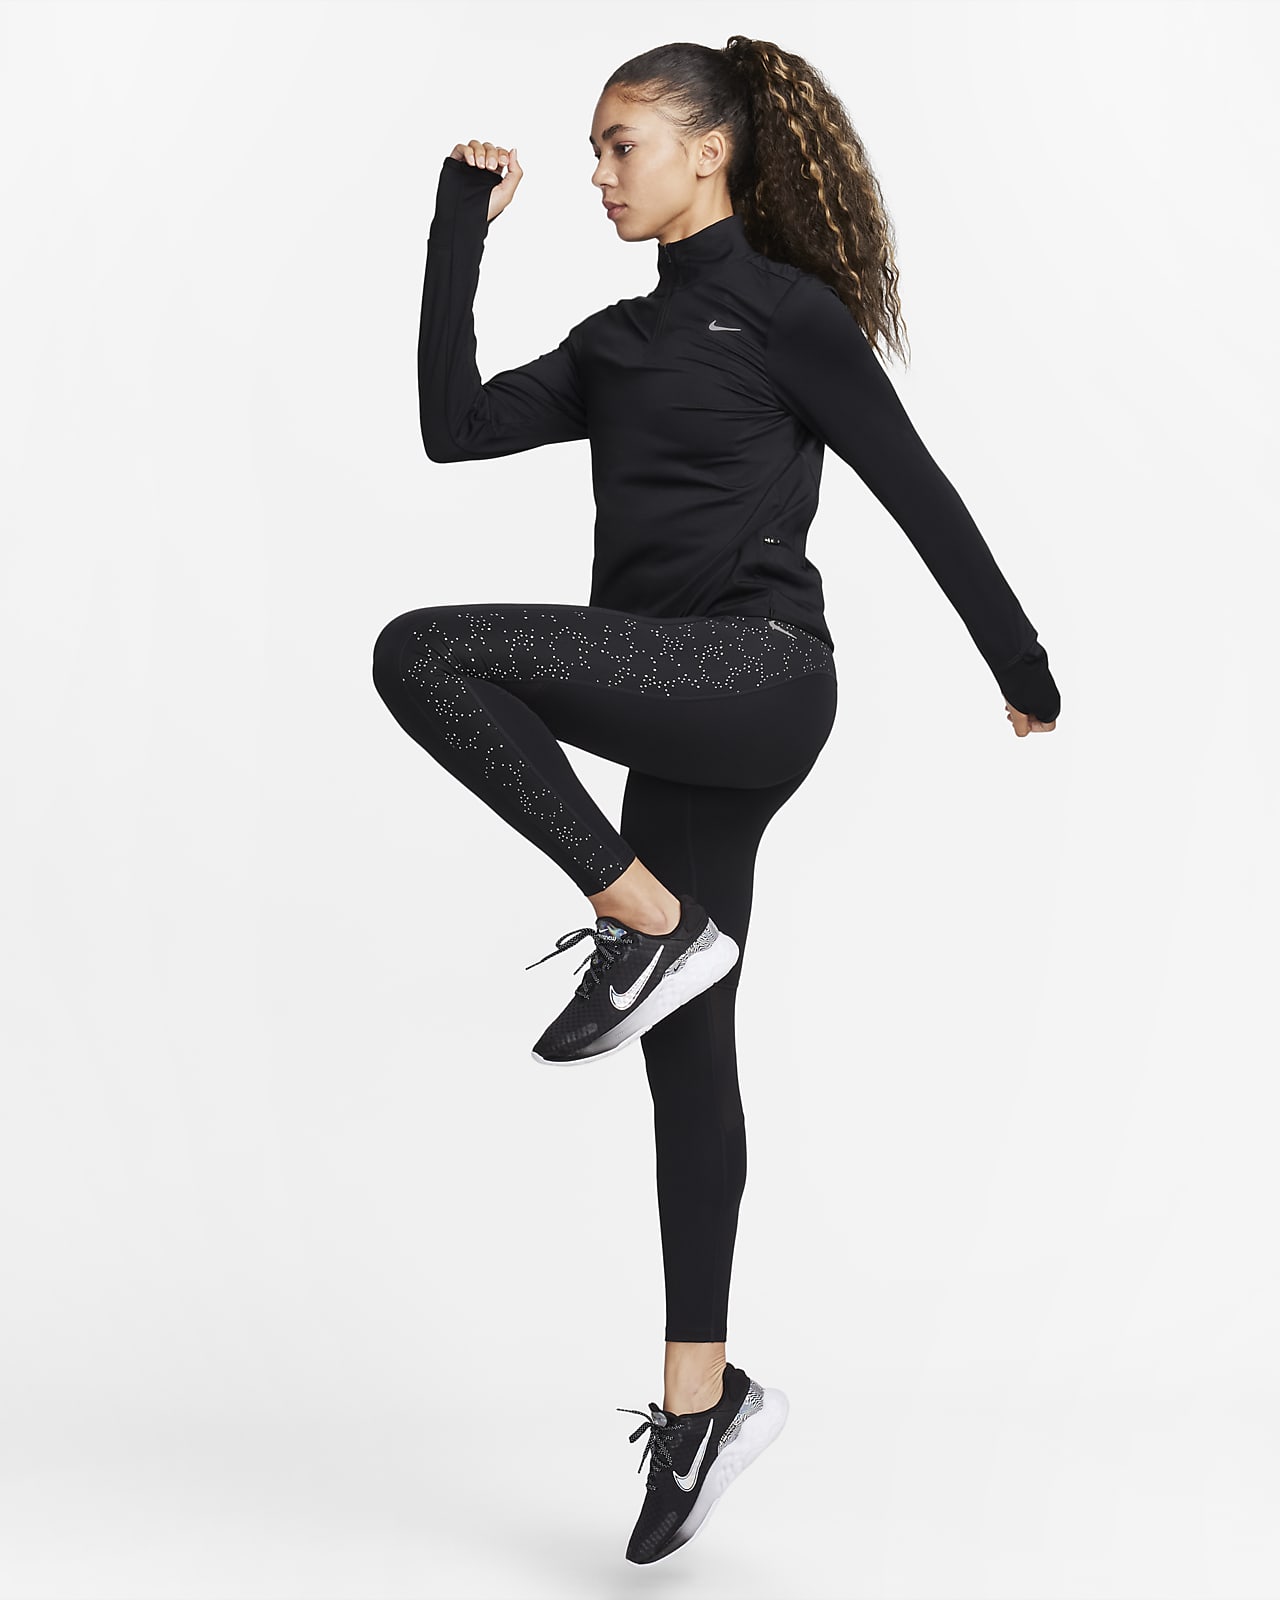 Women's Running Trousers & Tights. Nike UK